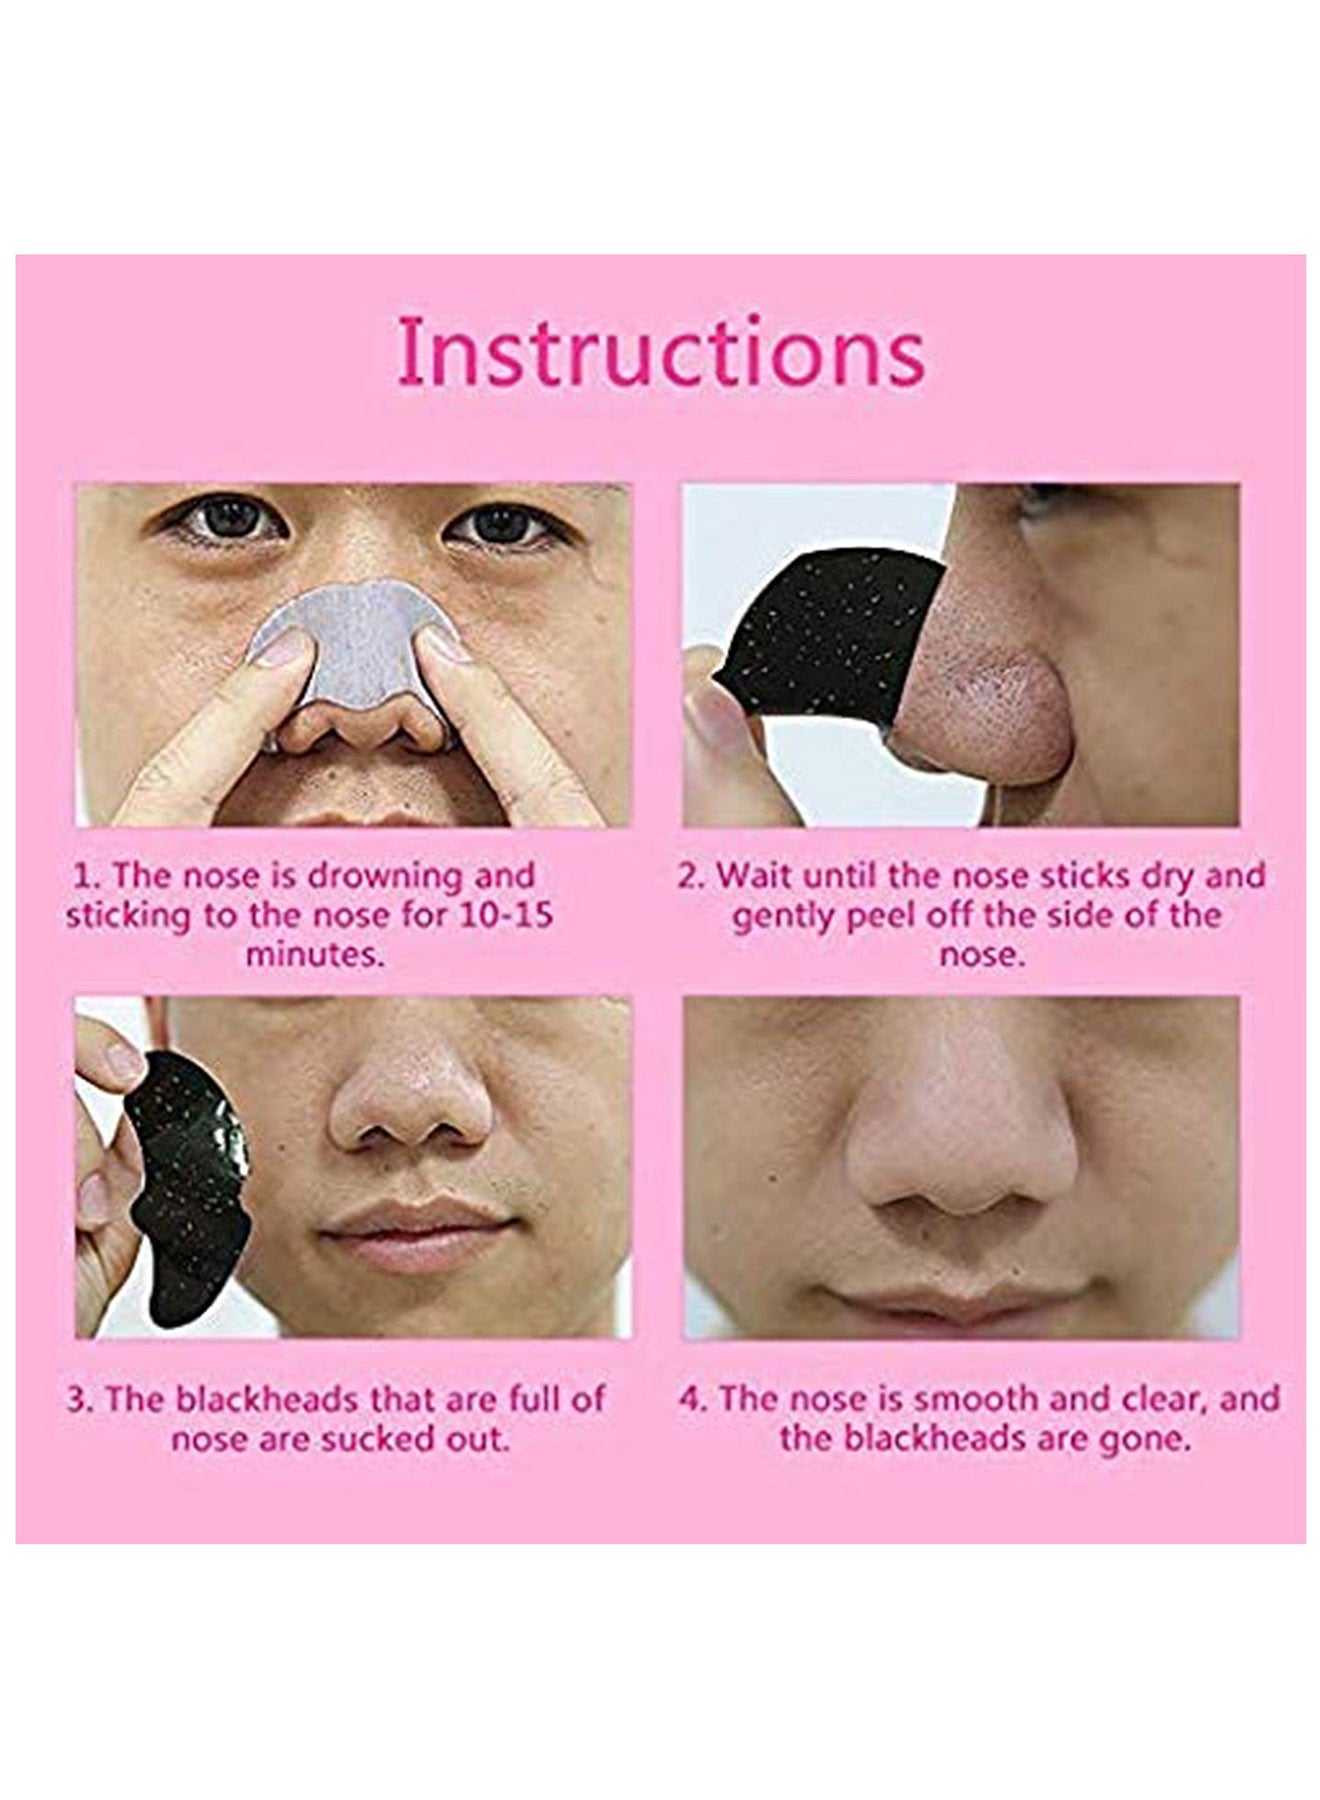 Dr Rashel Black Charcoal Nose Strips Blackhead Remover 6 Strips Value Pack of 3 